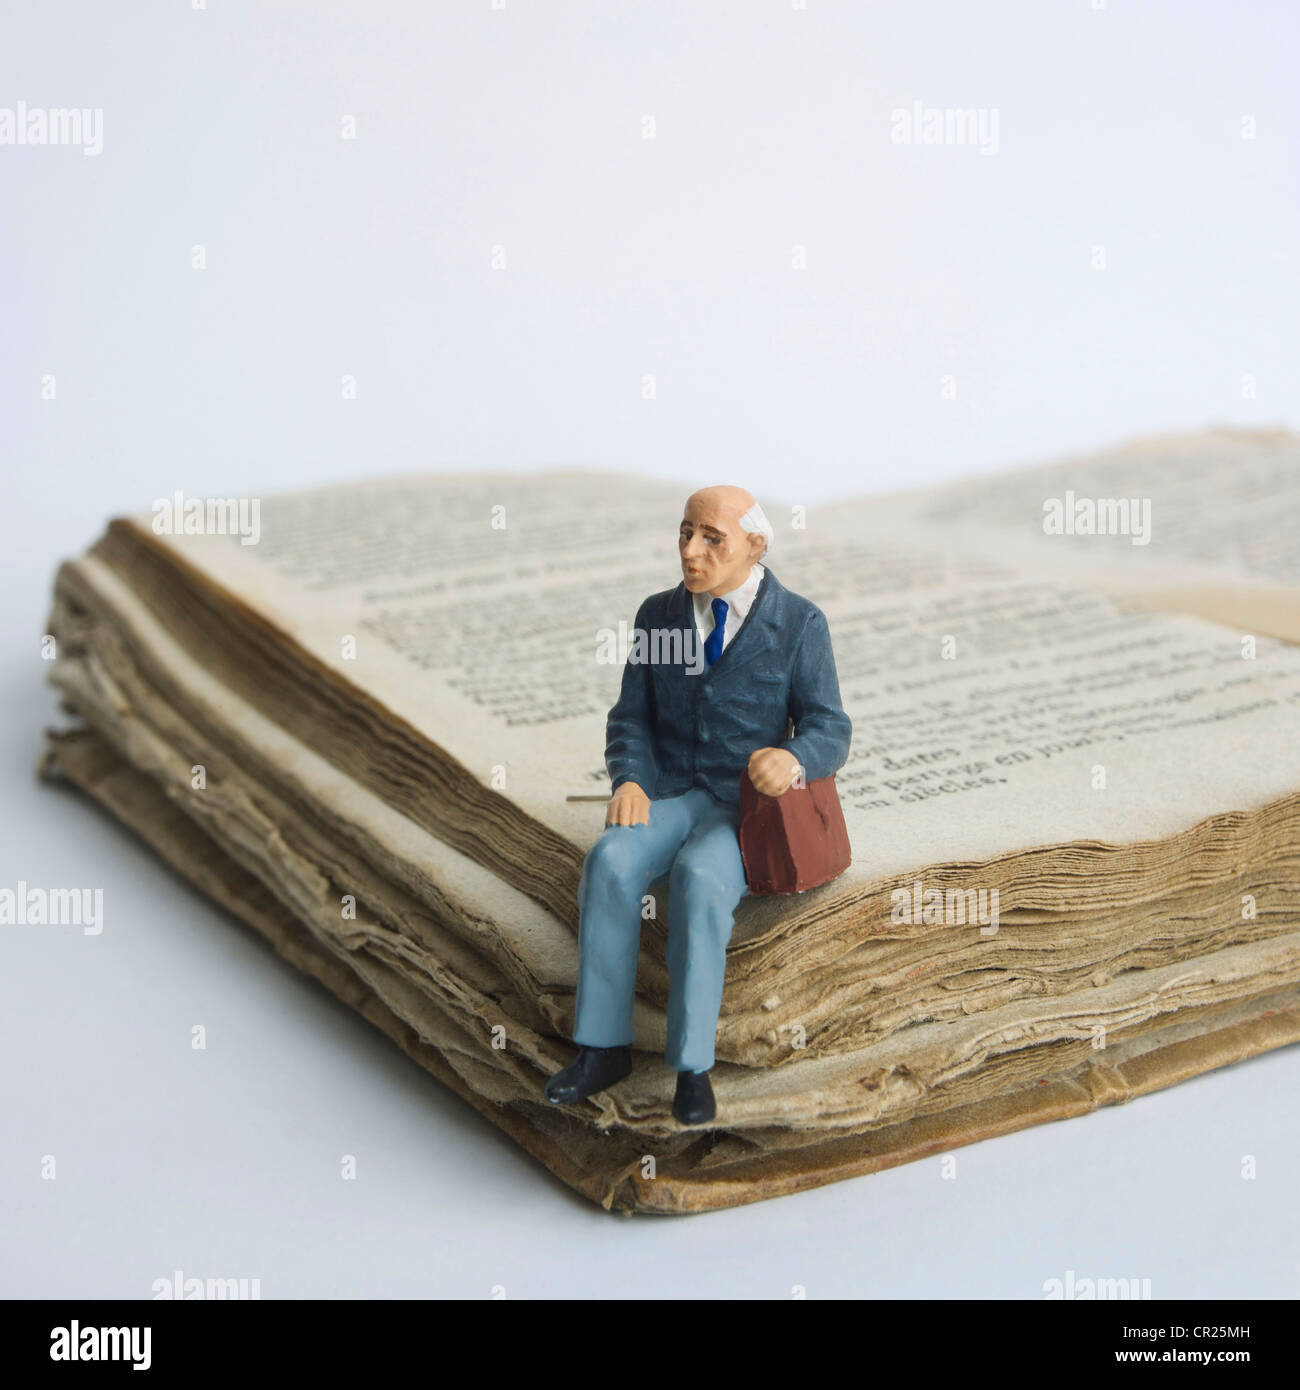 Elderly man, miniature figurine, sitting on an old book. Stock Photo